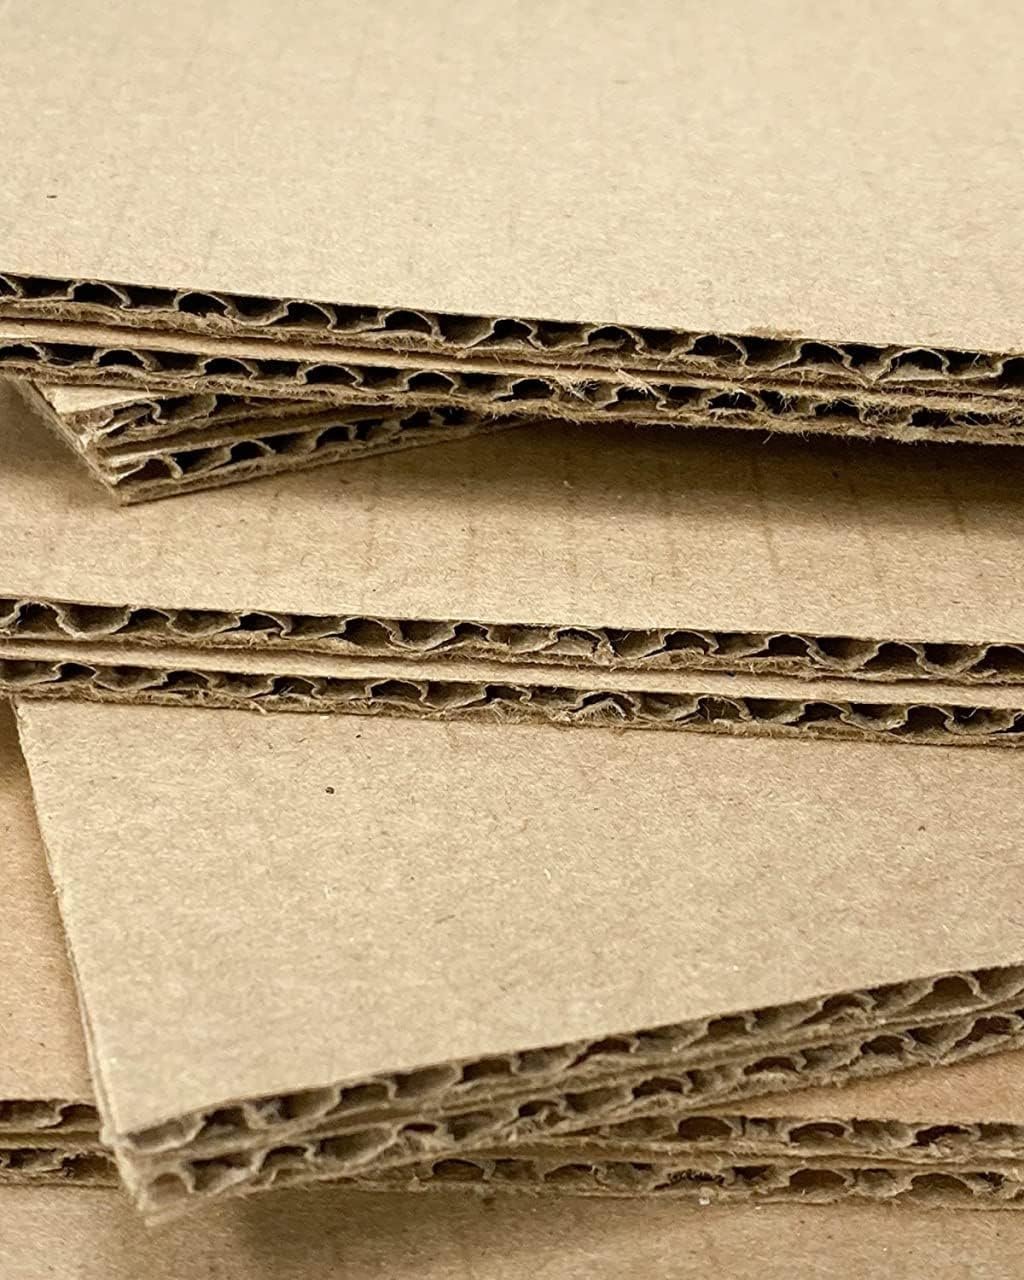 48 x 60 Extra Large Corrugated Cardboard Sheets (32 ECT) - 5